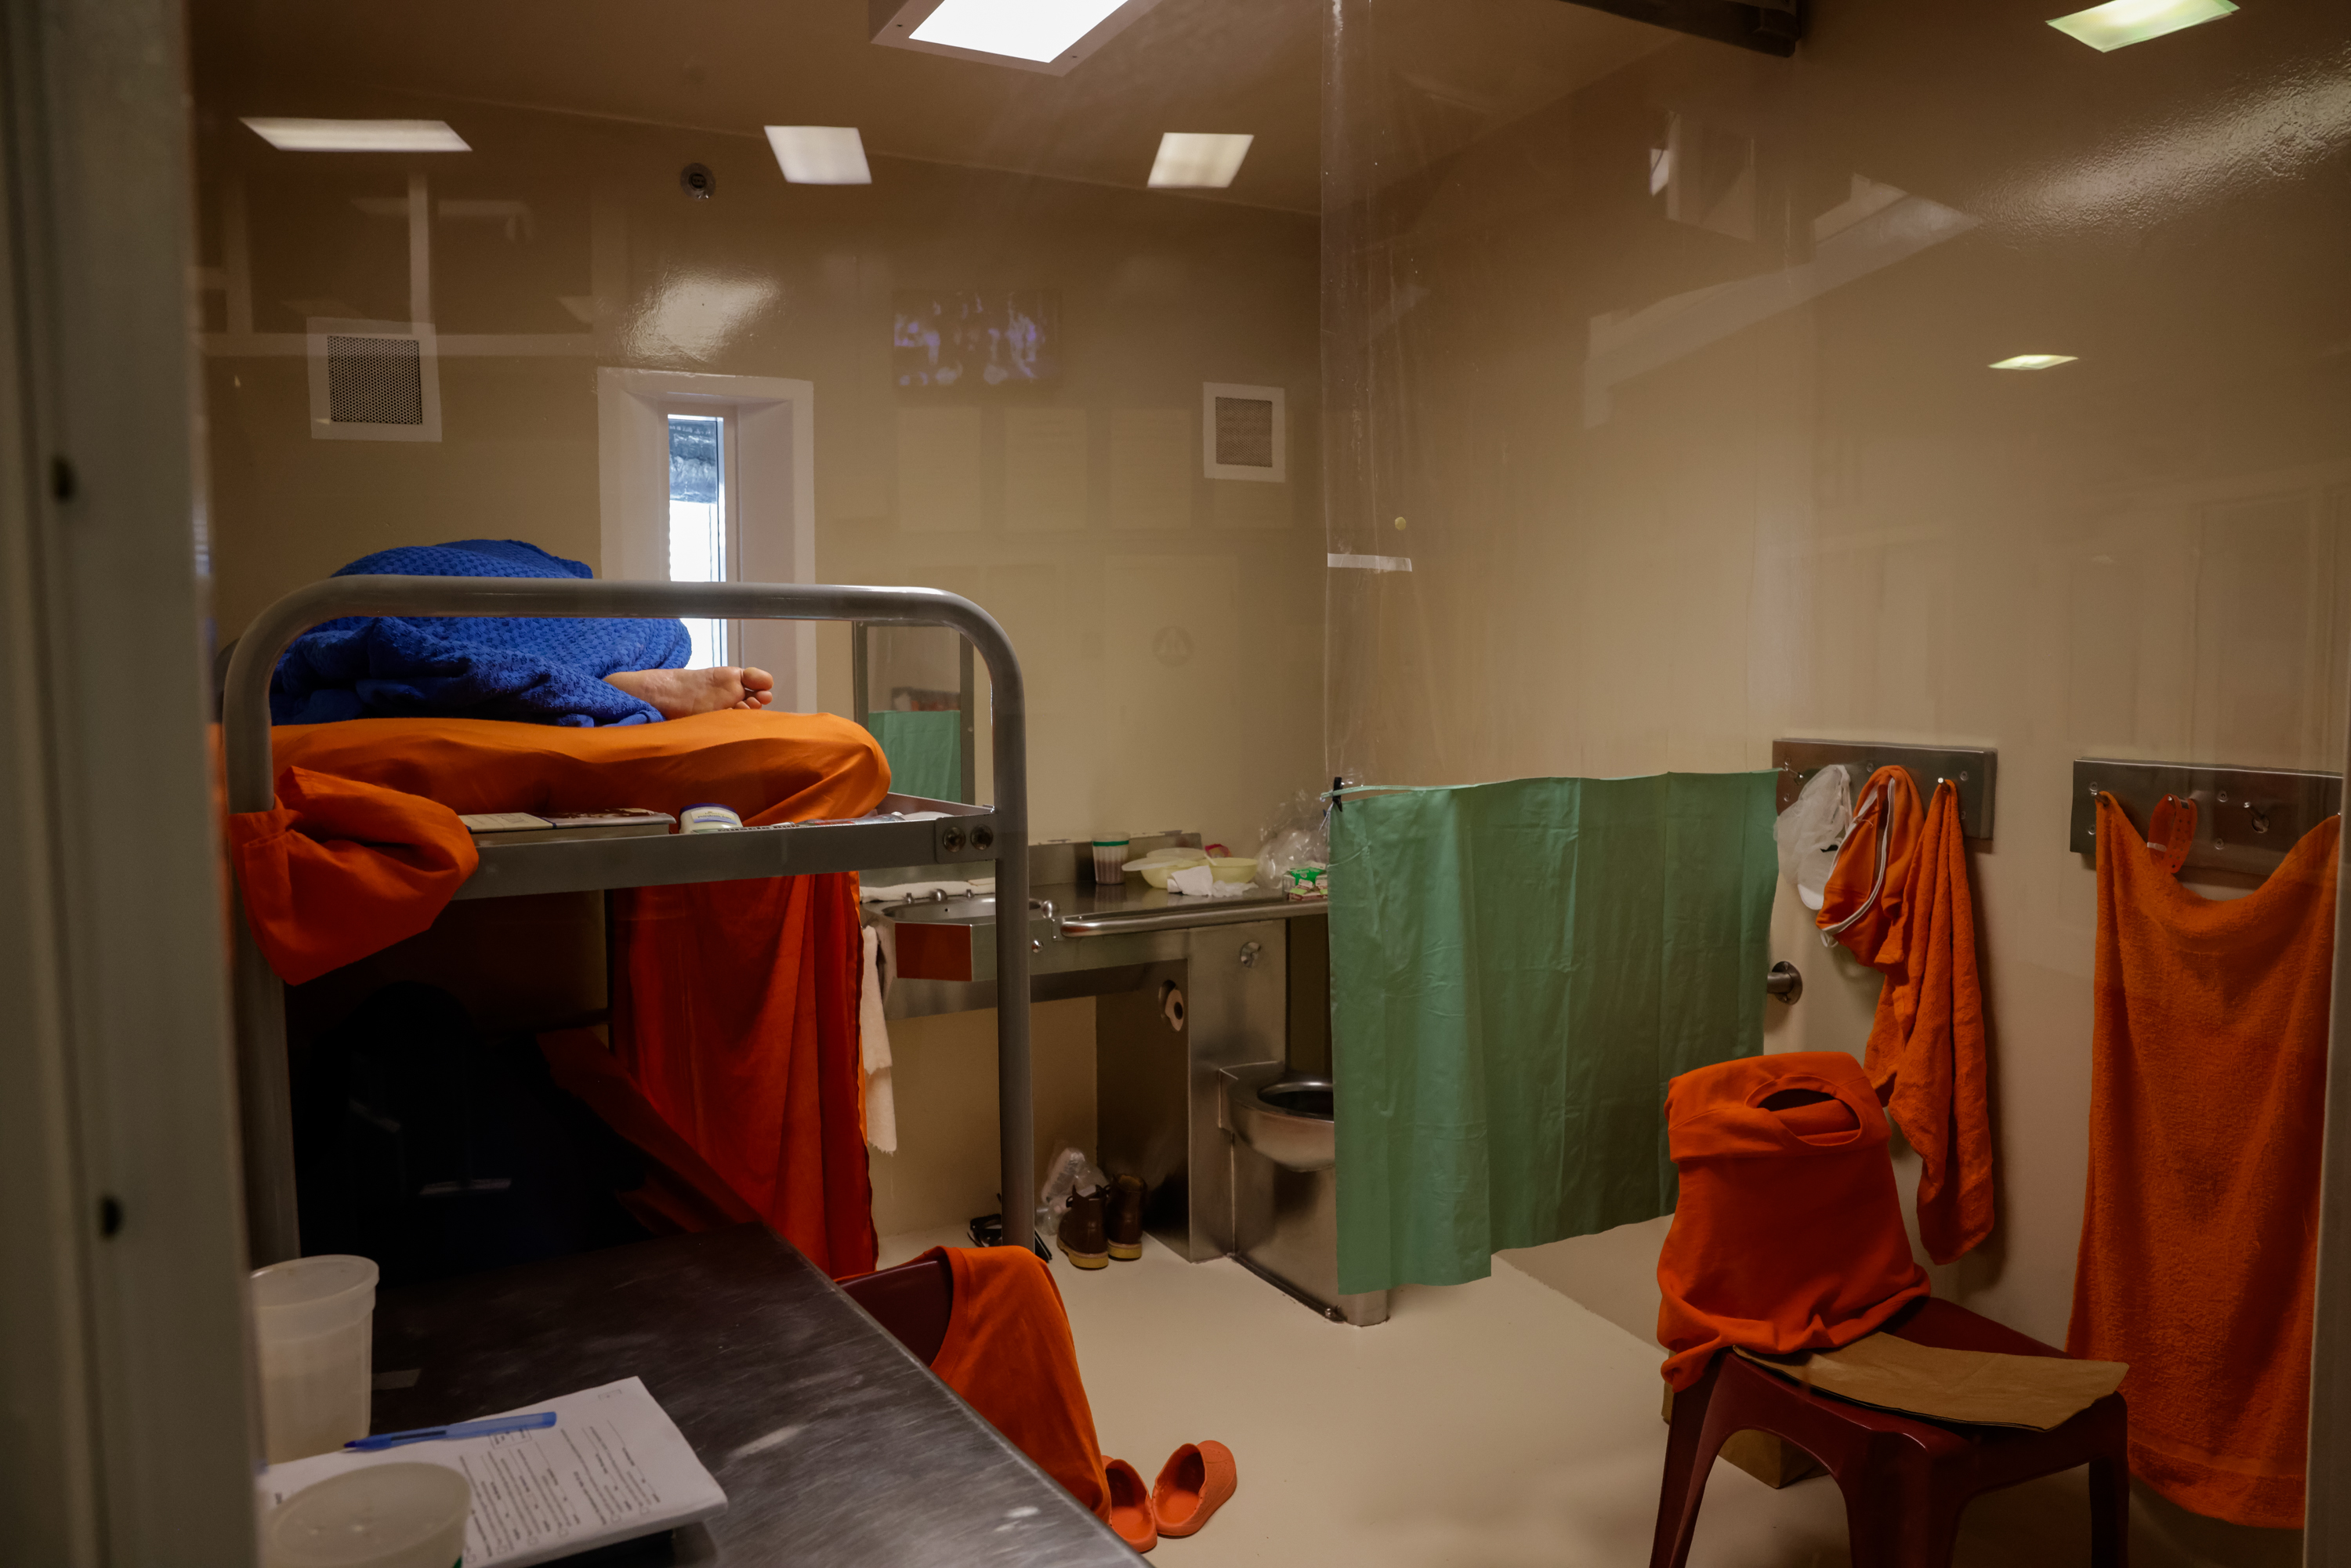 An inmate sleeps inside a jail cell.